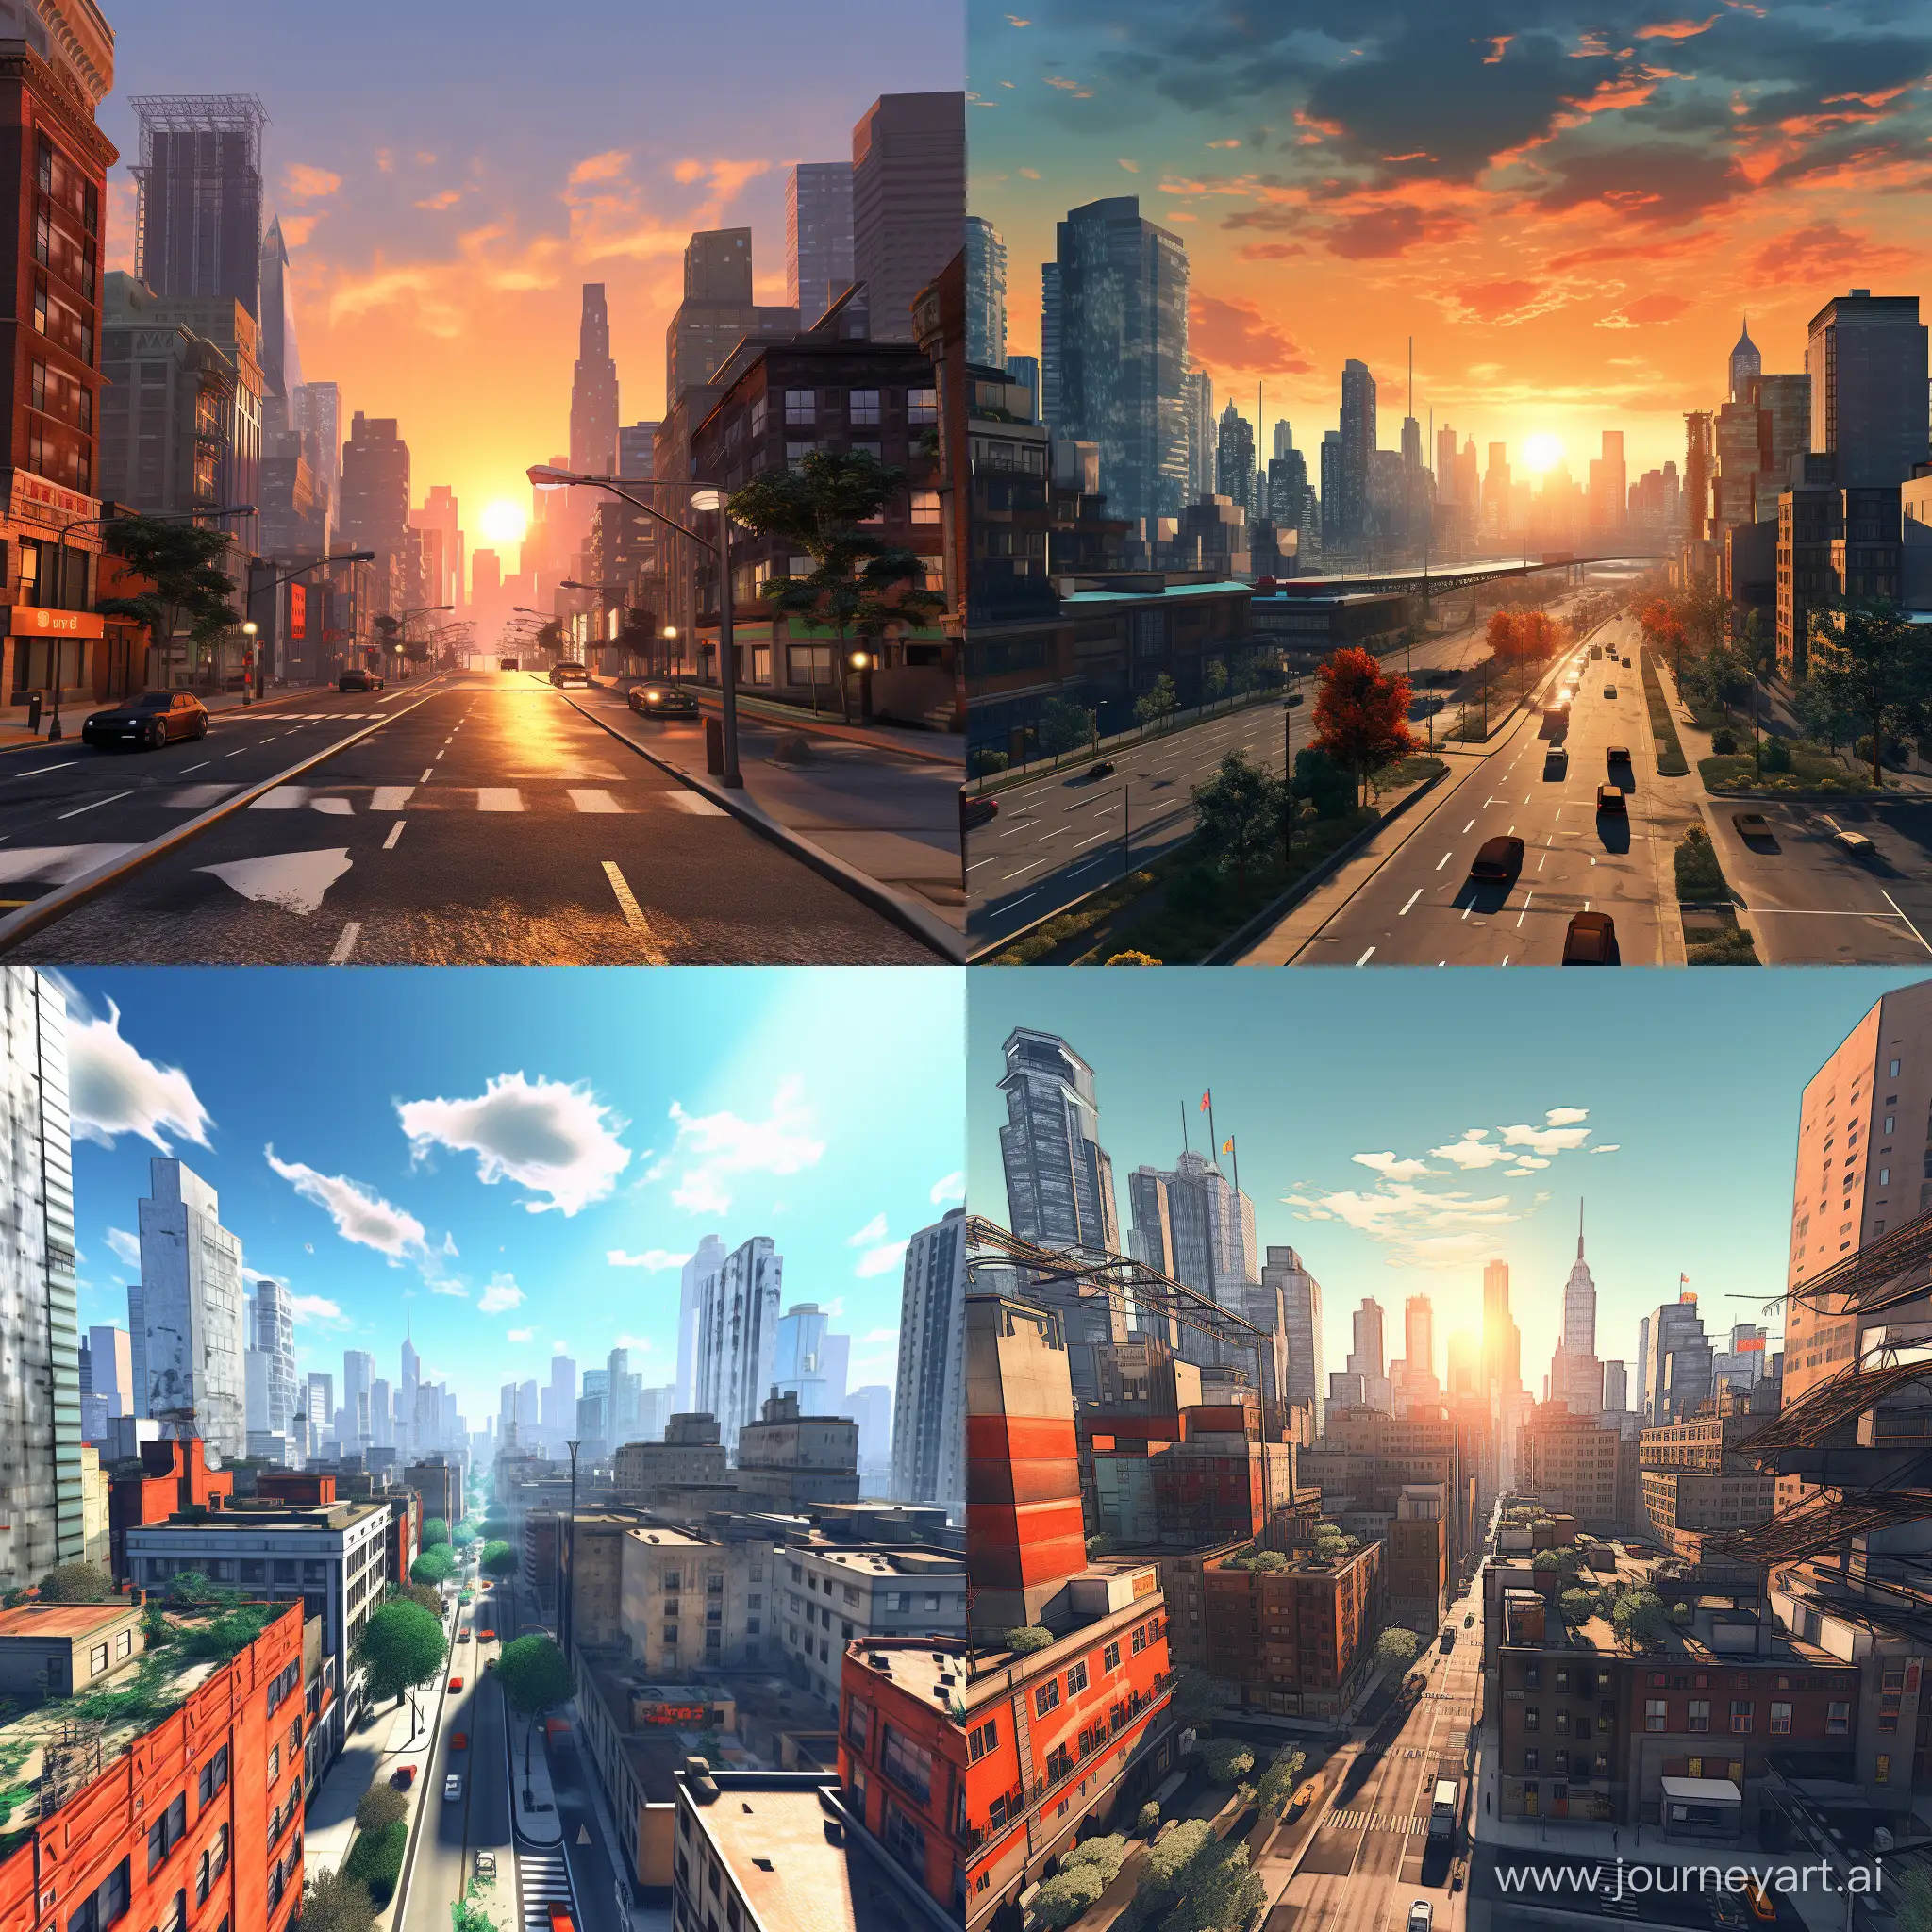 A city view GTA 6 style